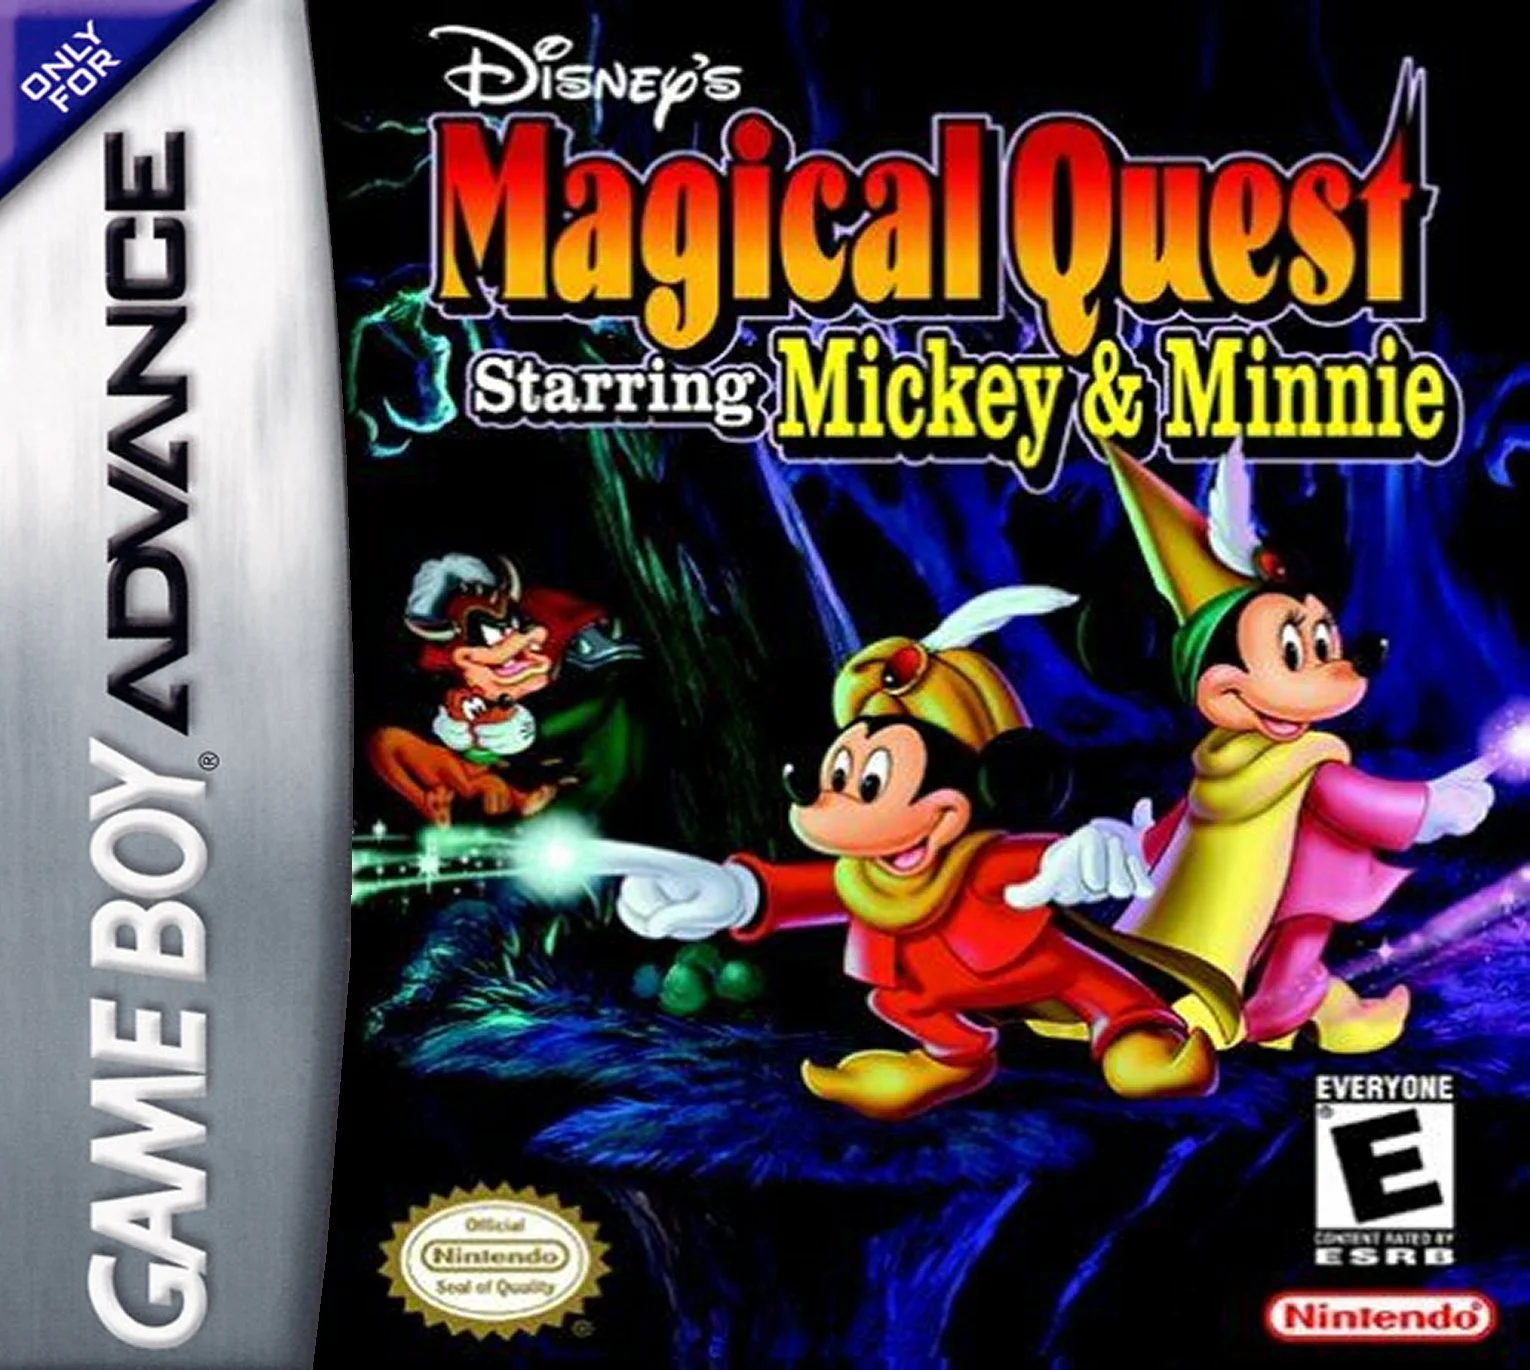 Disney's Magical Quest starring Mickey & Minnie